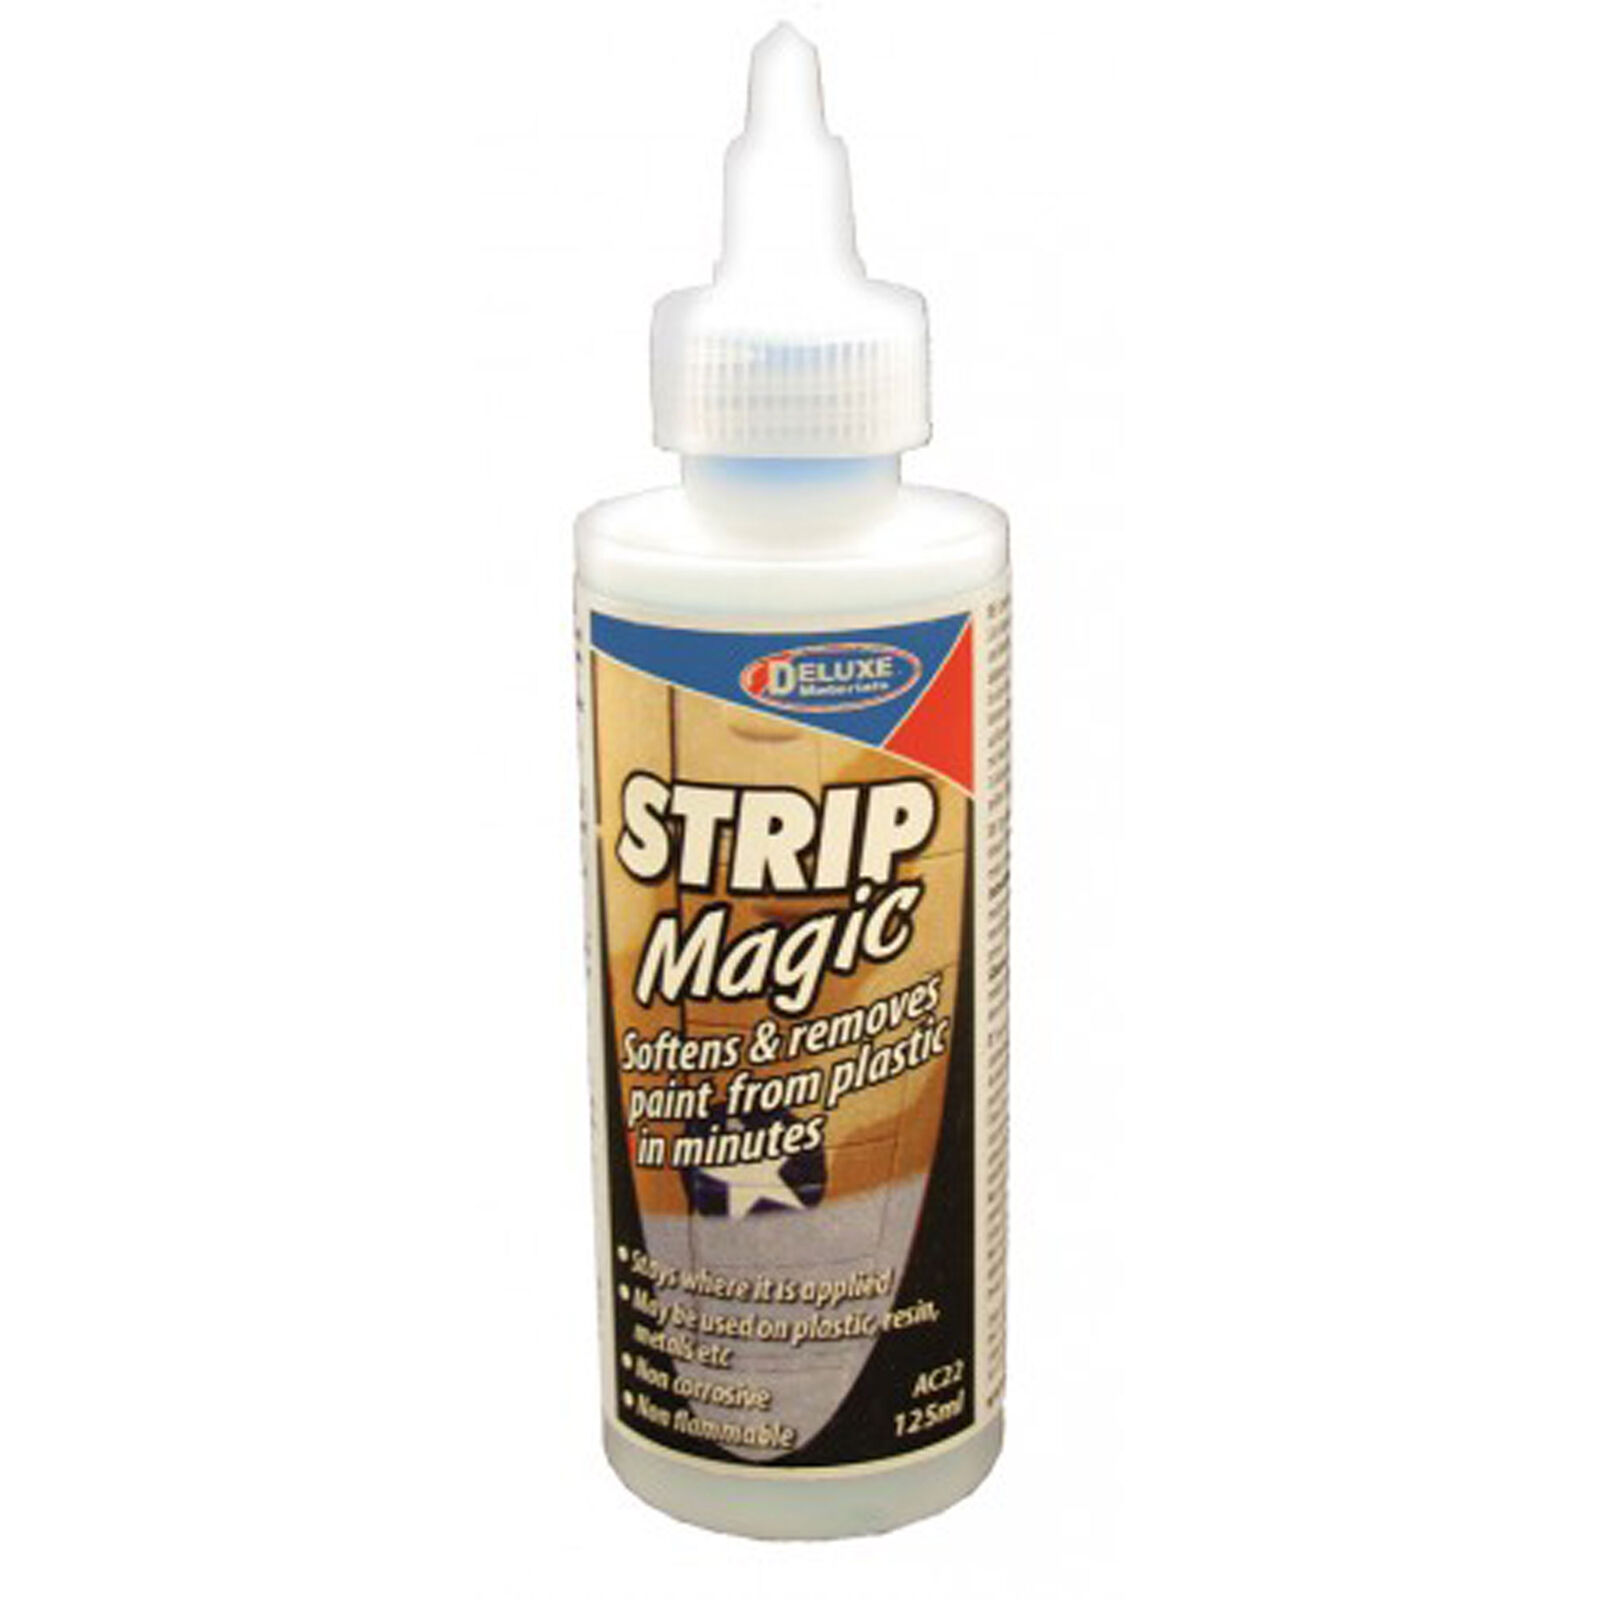 Strip Magic, Paint Removal, 125ml